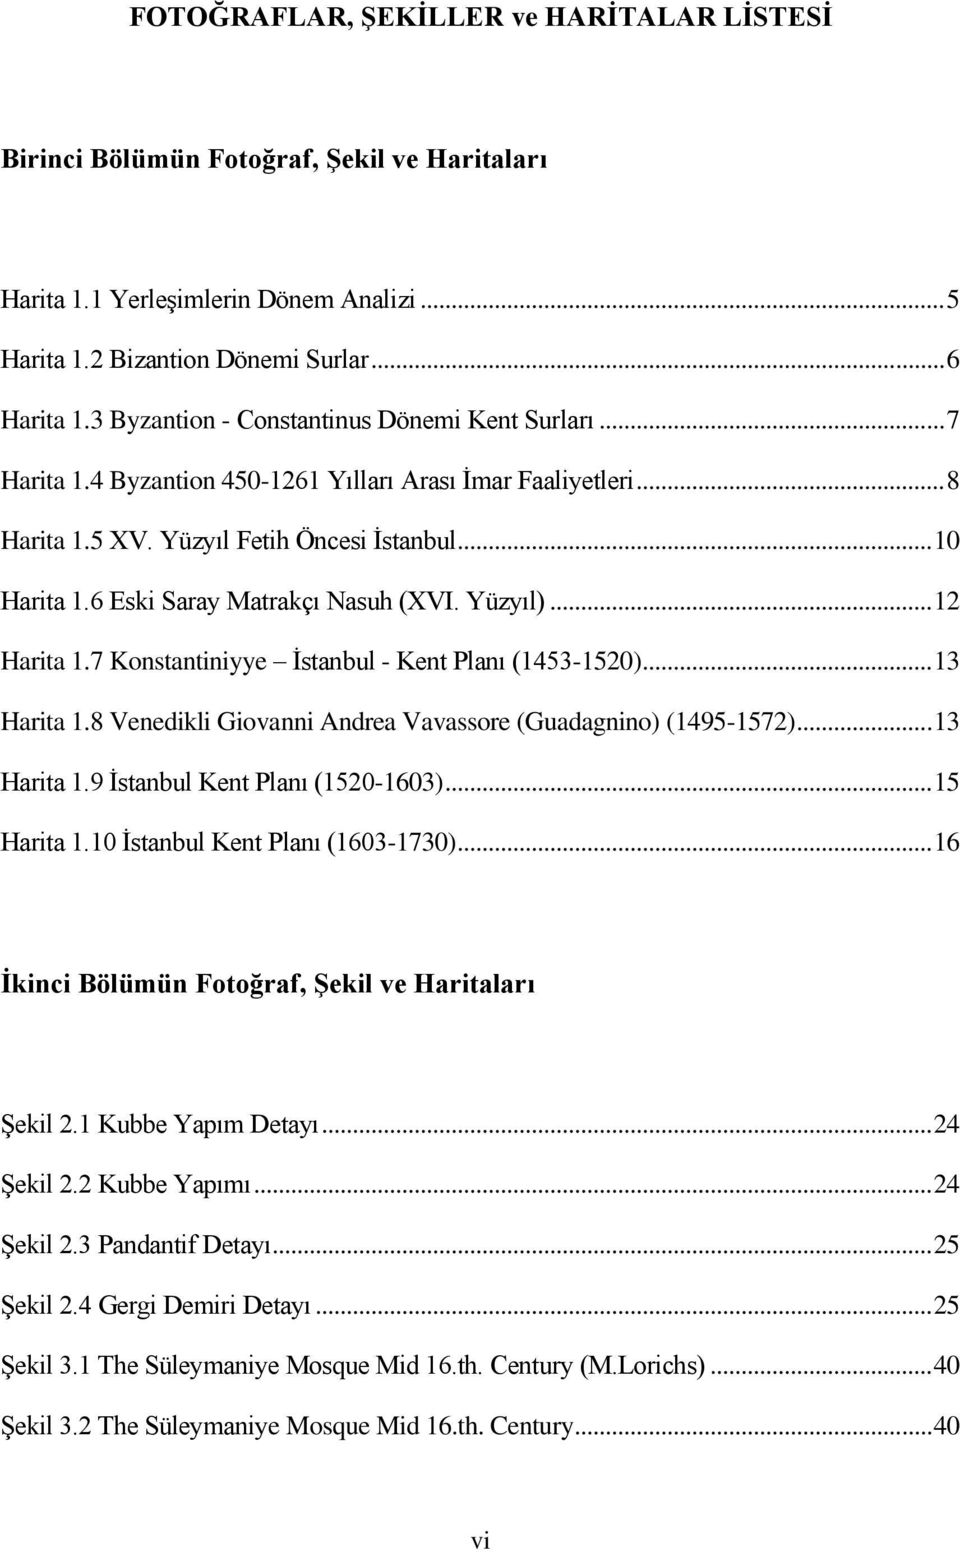 6 Eski Saray Matrakçı Nasuh (XVI. Yüzyıl)... 12 Harita 1.7 Konstantiniyye İstanbul - Kent Planı (1453-1520)... 13 Harita 1.8 Venedikli Giovanni Andrea Vavassore (Guadagnino) (1495-1572)... 13 Harita 1.9 İstanbul Kent Planı (1520-1603).